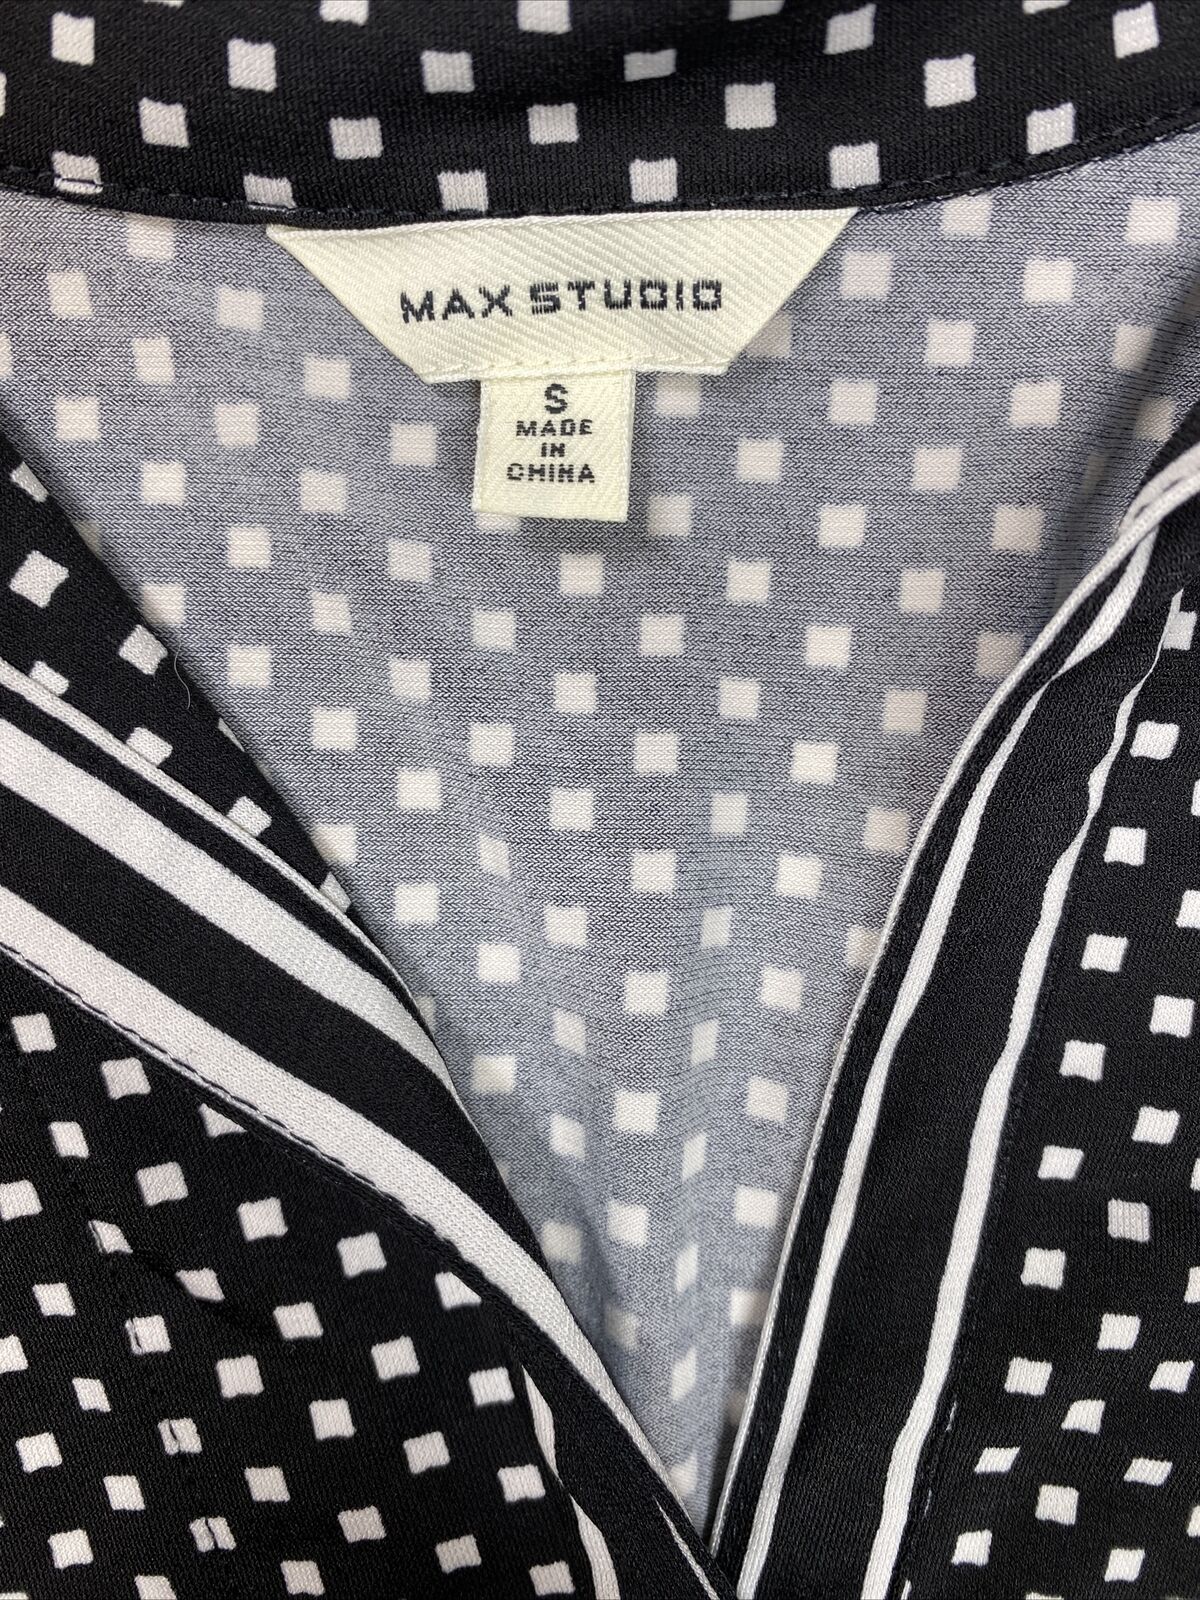 Max Studio Women's Black 3/4 Bell Sleeve Stretch Shift Dress - S